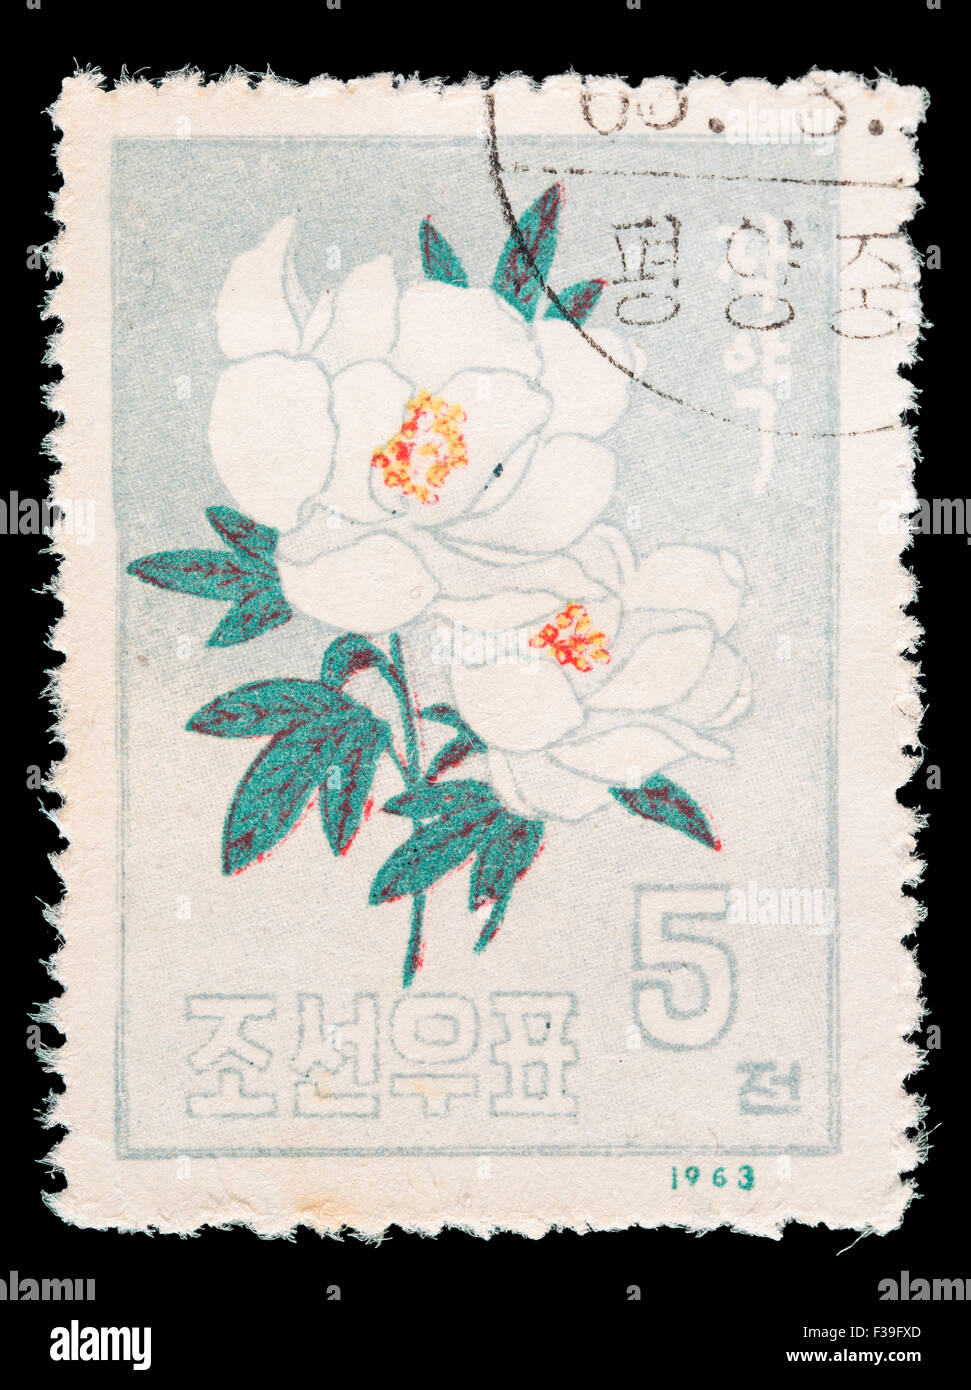 NORTH KOREA - CIRCA 1963: A postage stamp printed in North Korea shows a Japanese rose, Rosa rugosa, circa 1963 Stock Photo